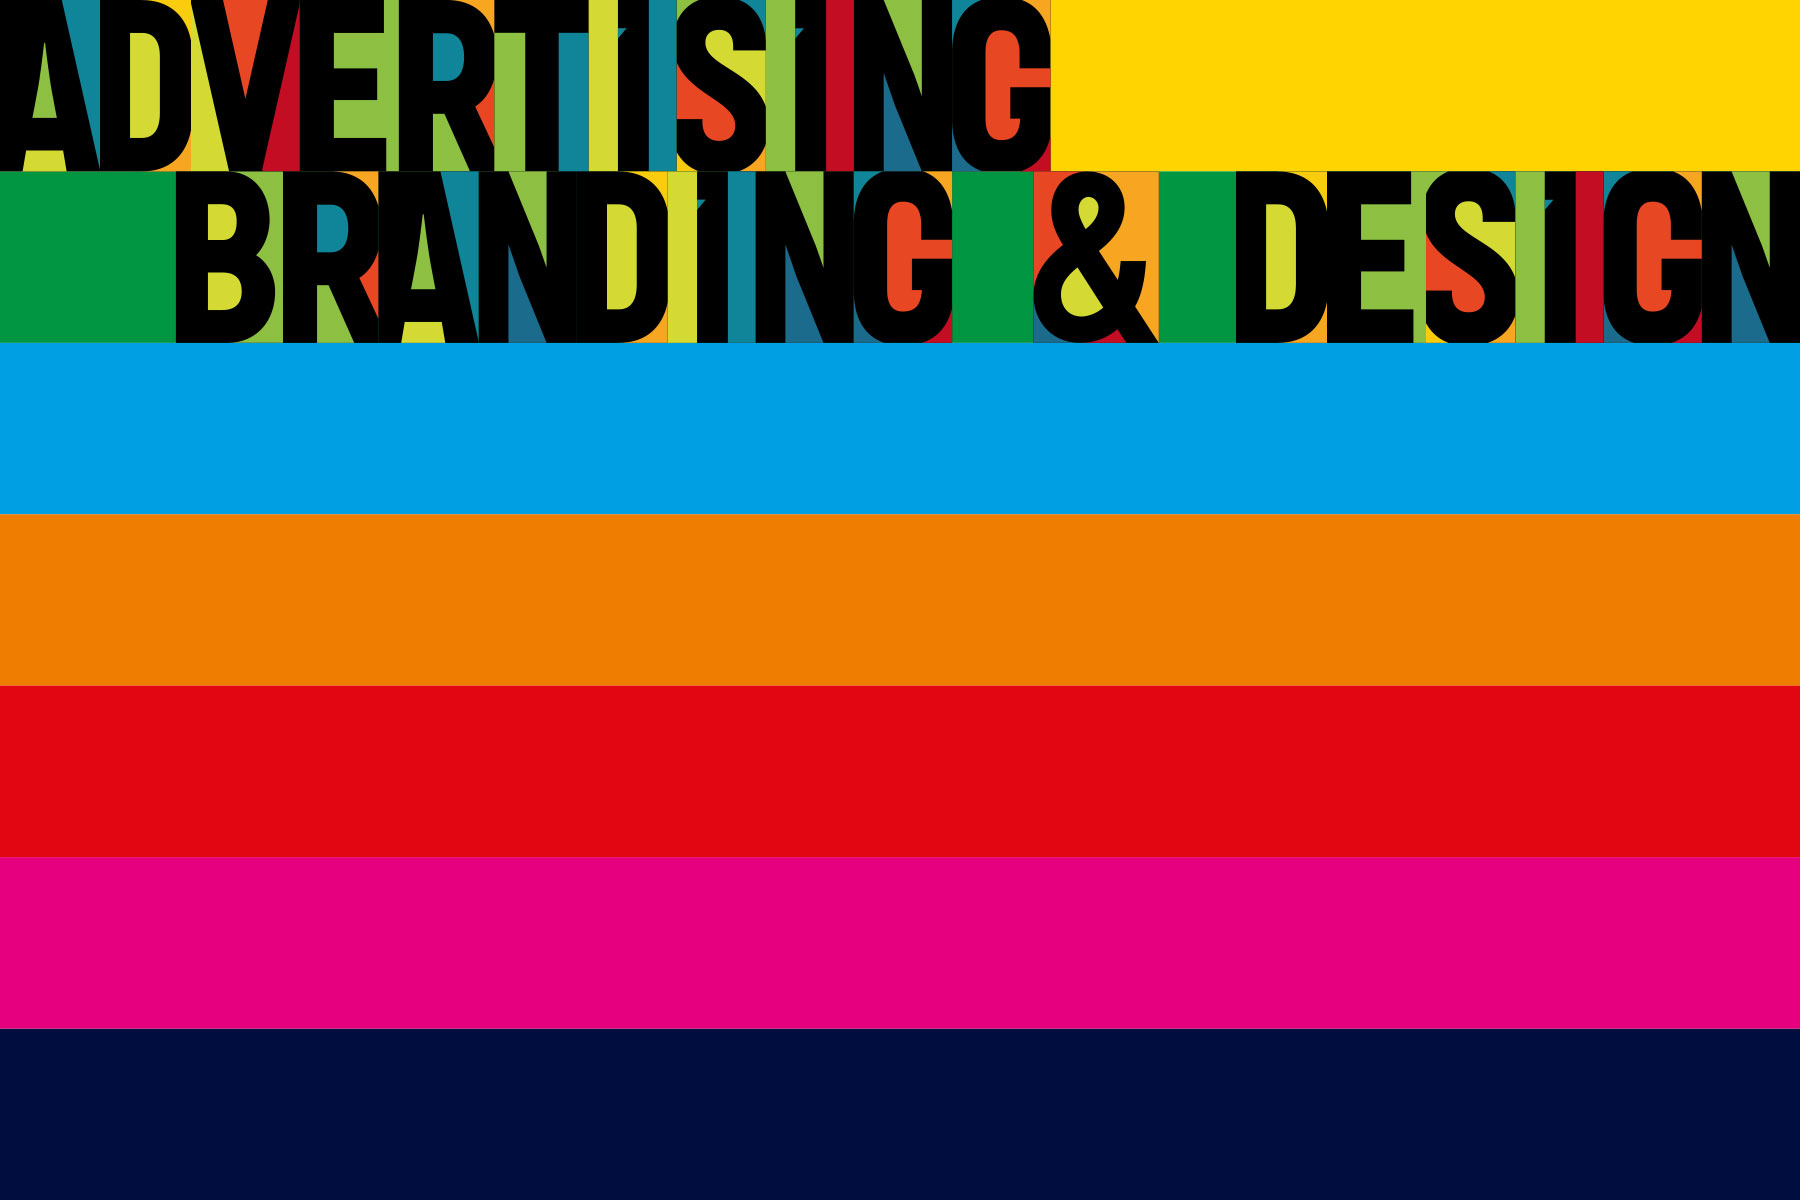 Advertising, branding & design